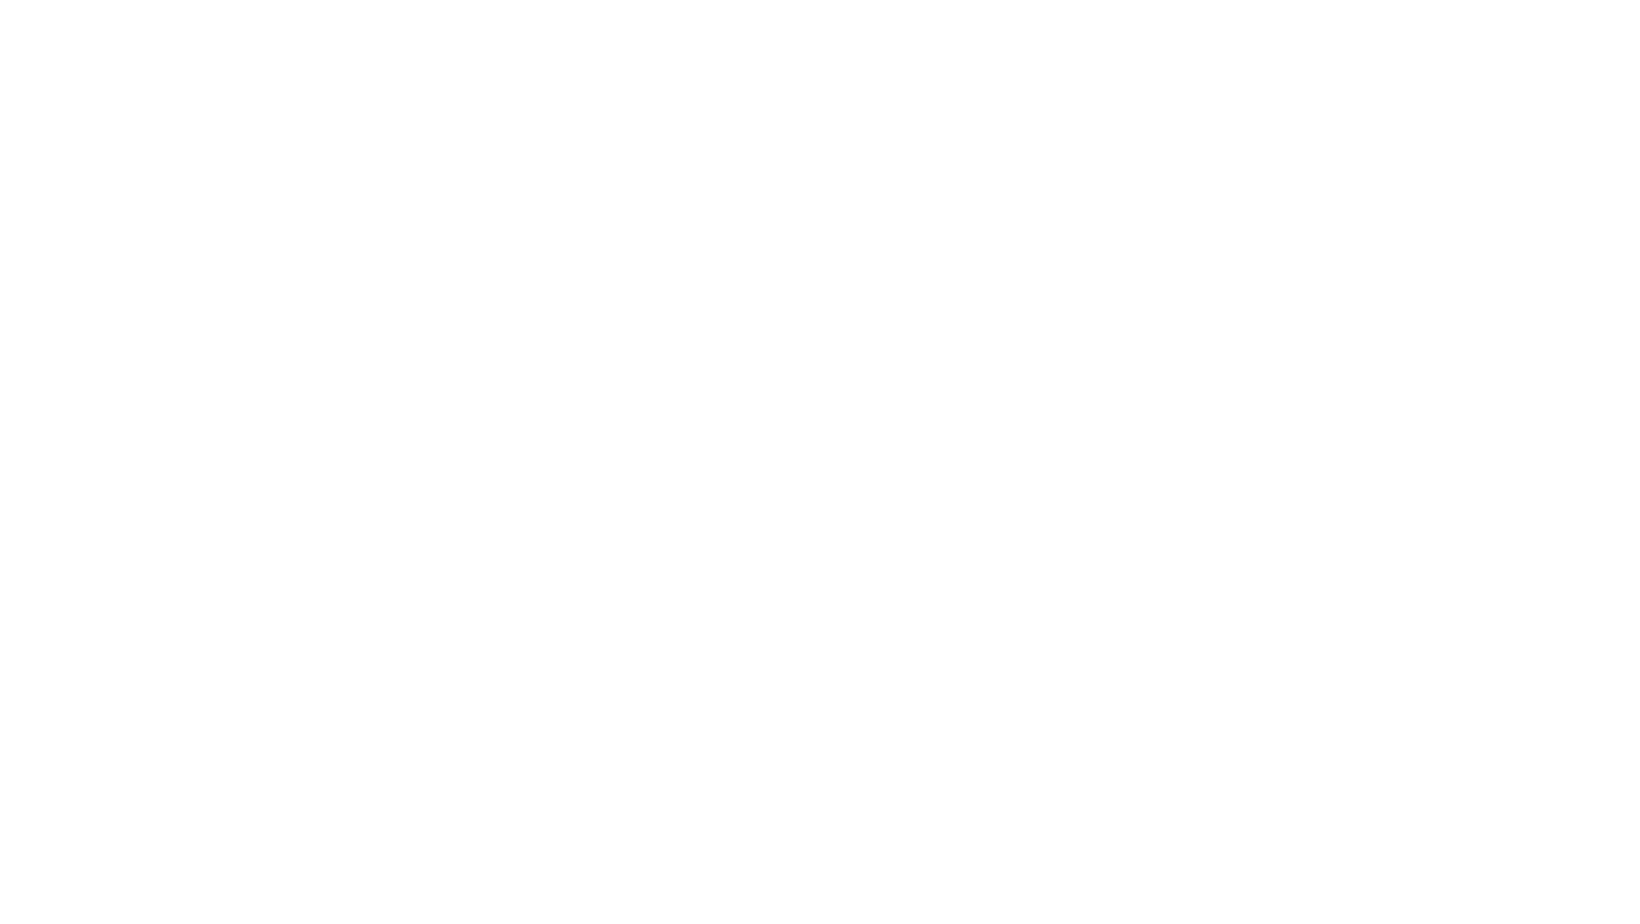 Daniel Childs